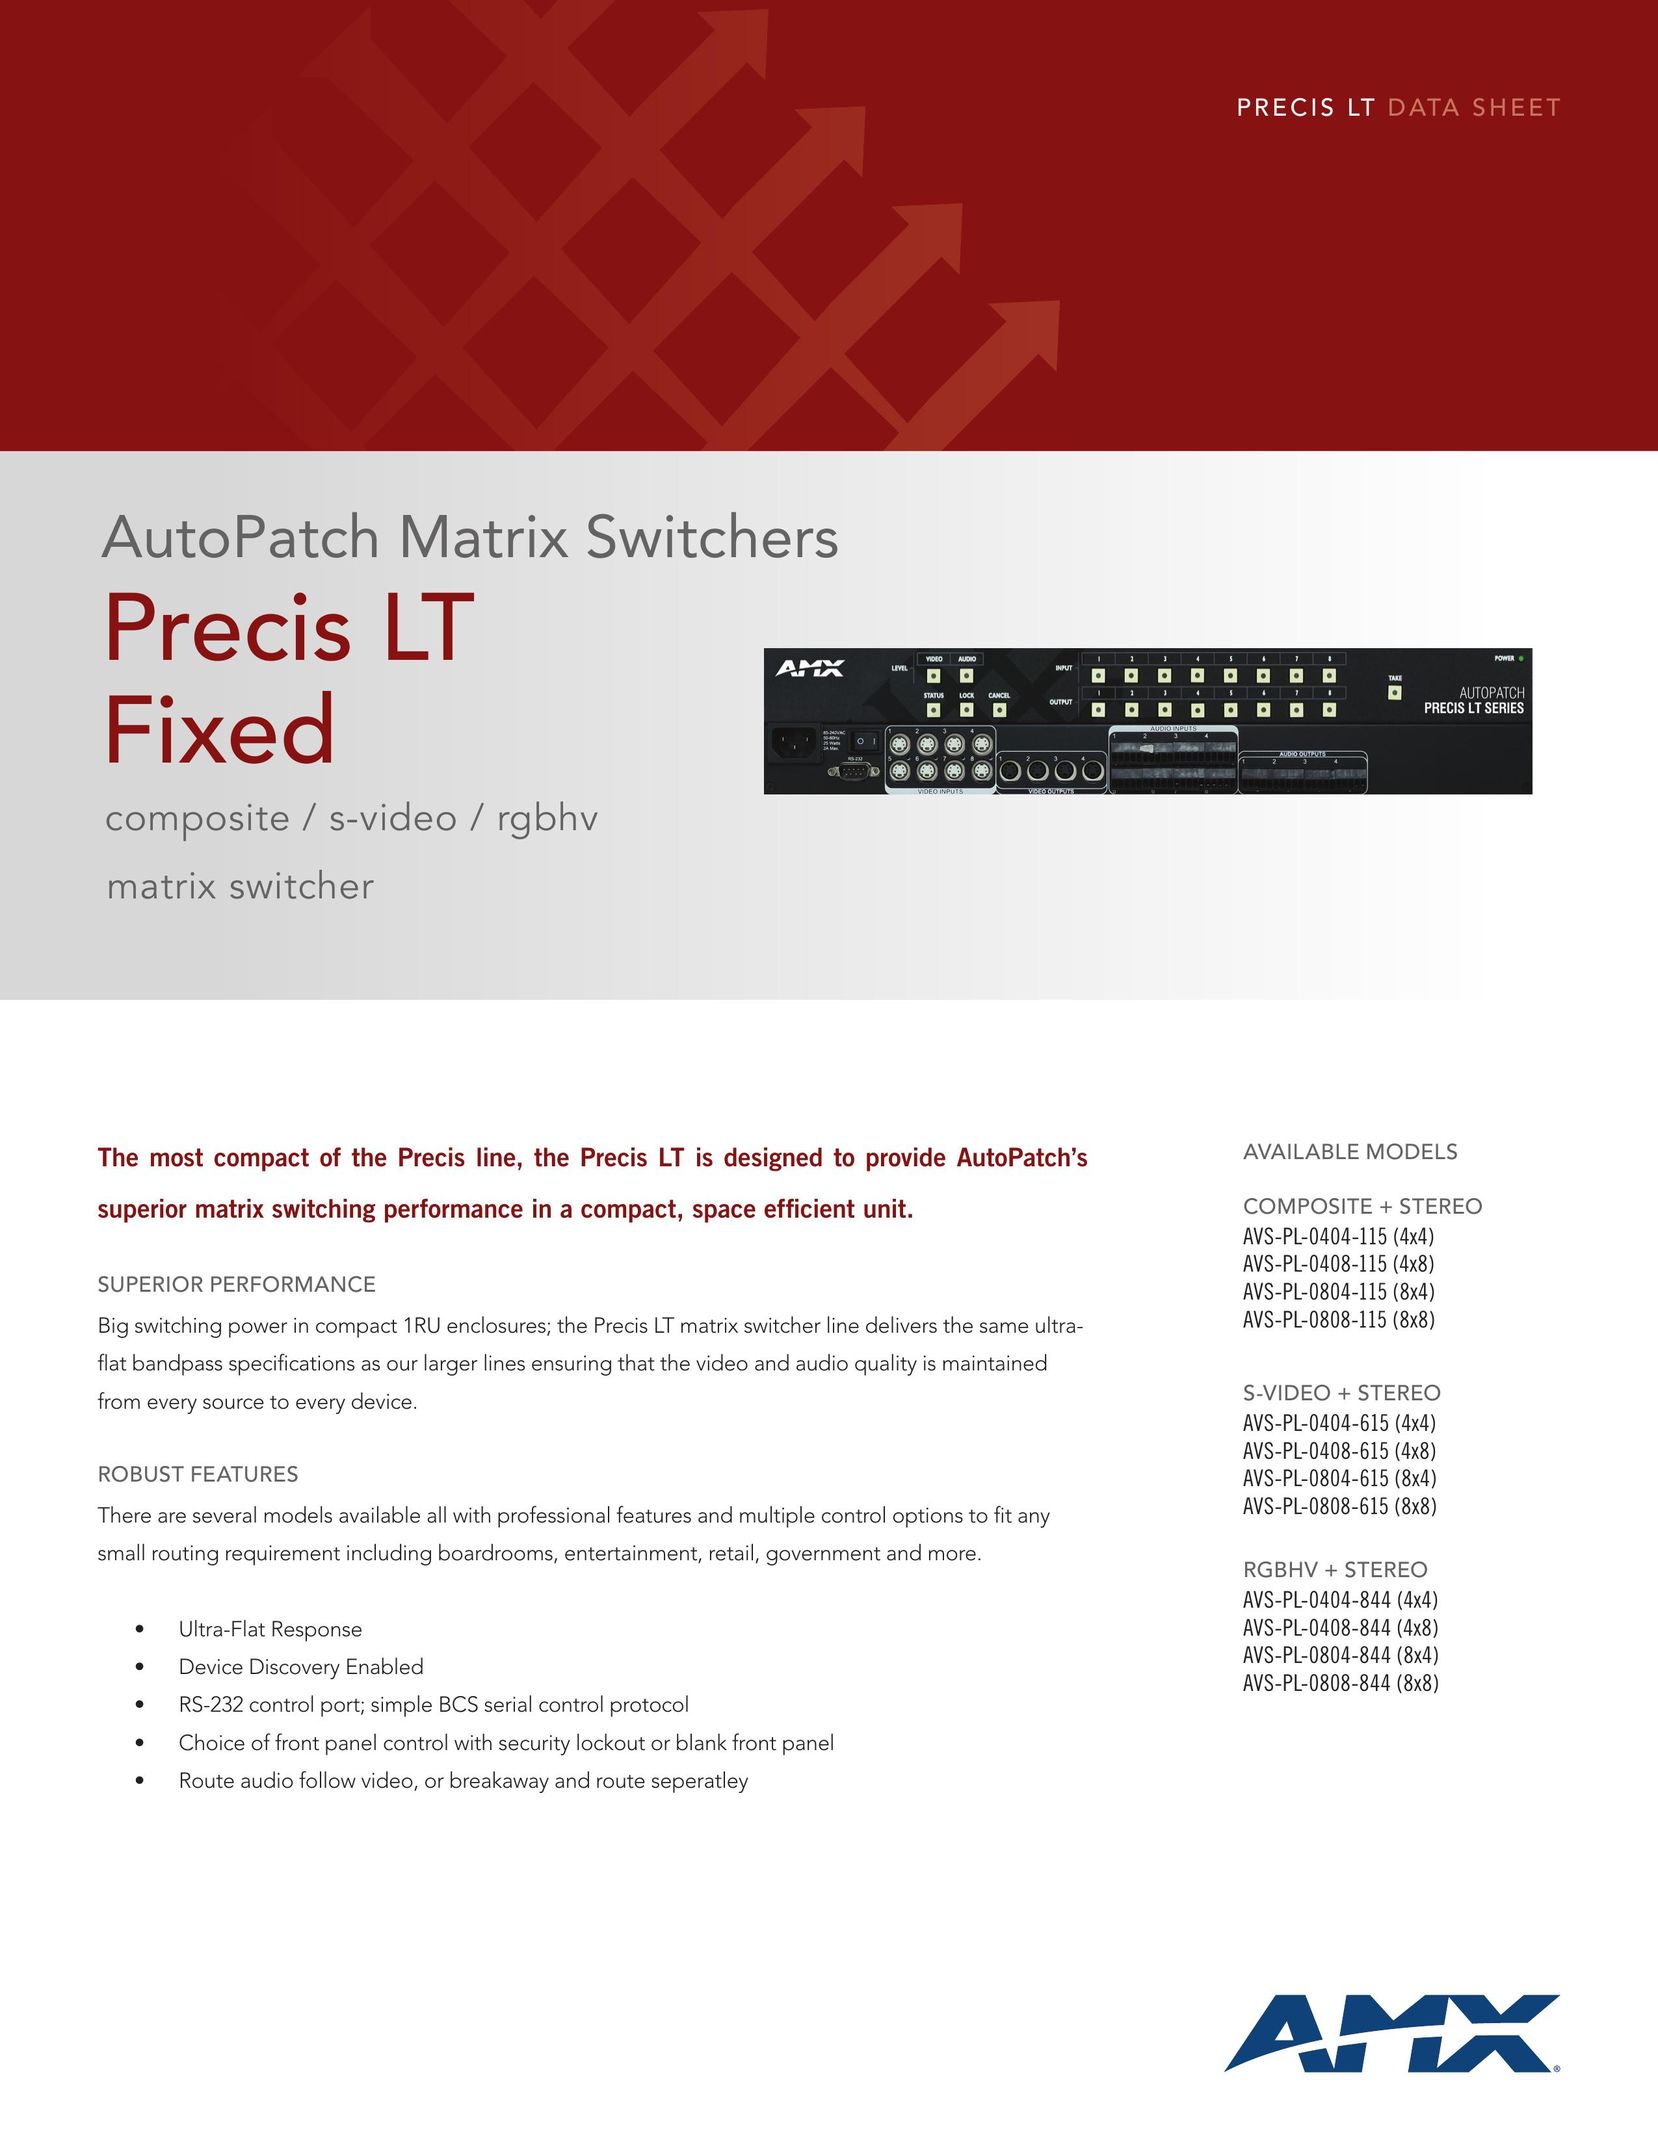 AMX AVS-PL-0408-615 Switch User Manual